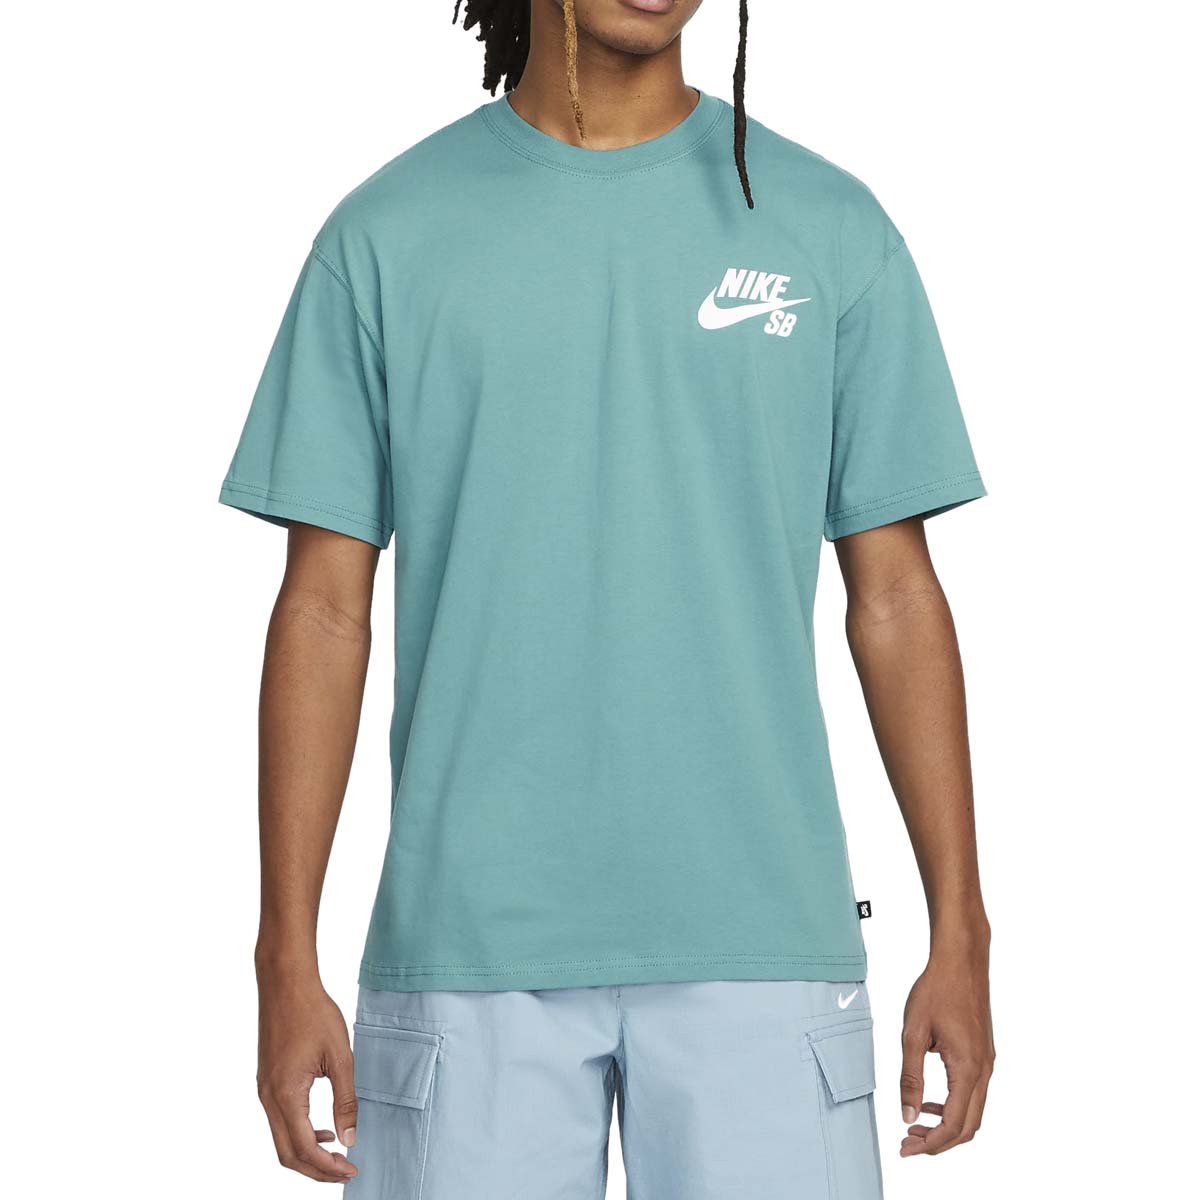 Nike SB New Logo T-Shirt - Mineral Teal image 2